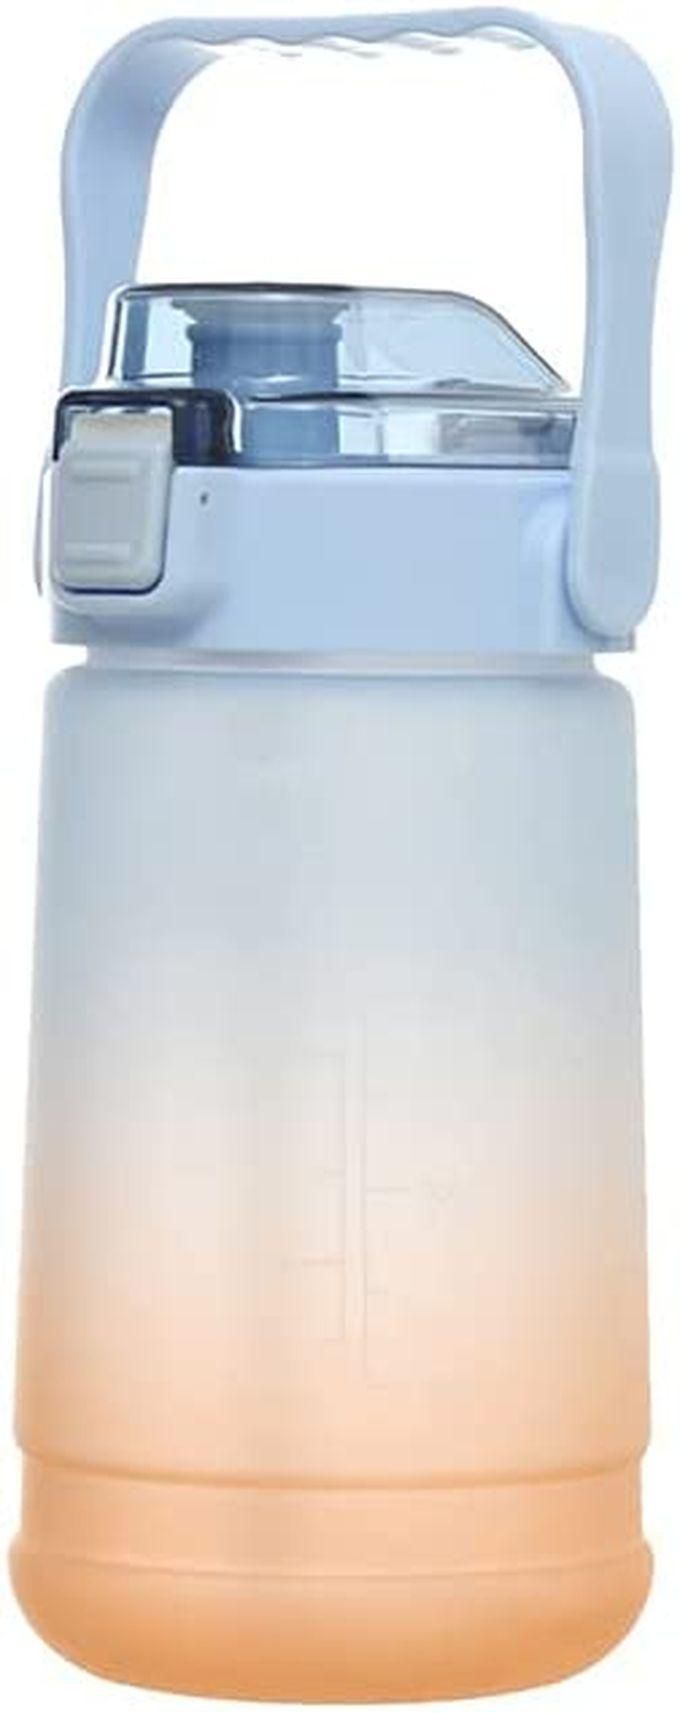 All Day Drinking Digital Water Bottle - 1 Liter